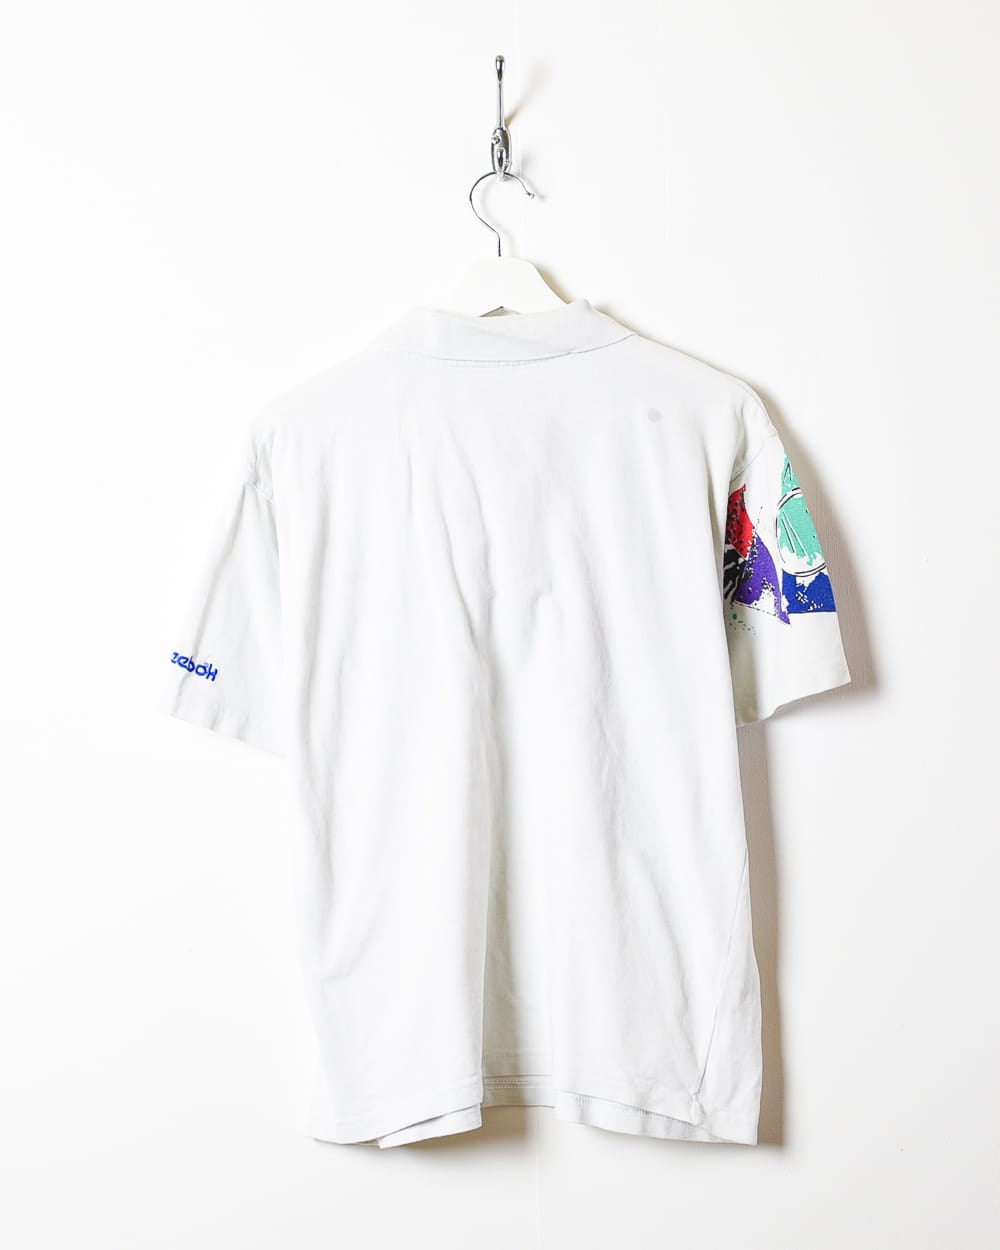 White Reebok Polo Shirt - X-Small